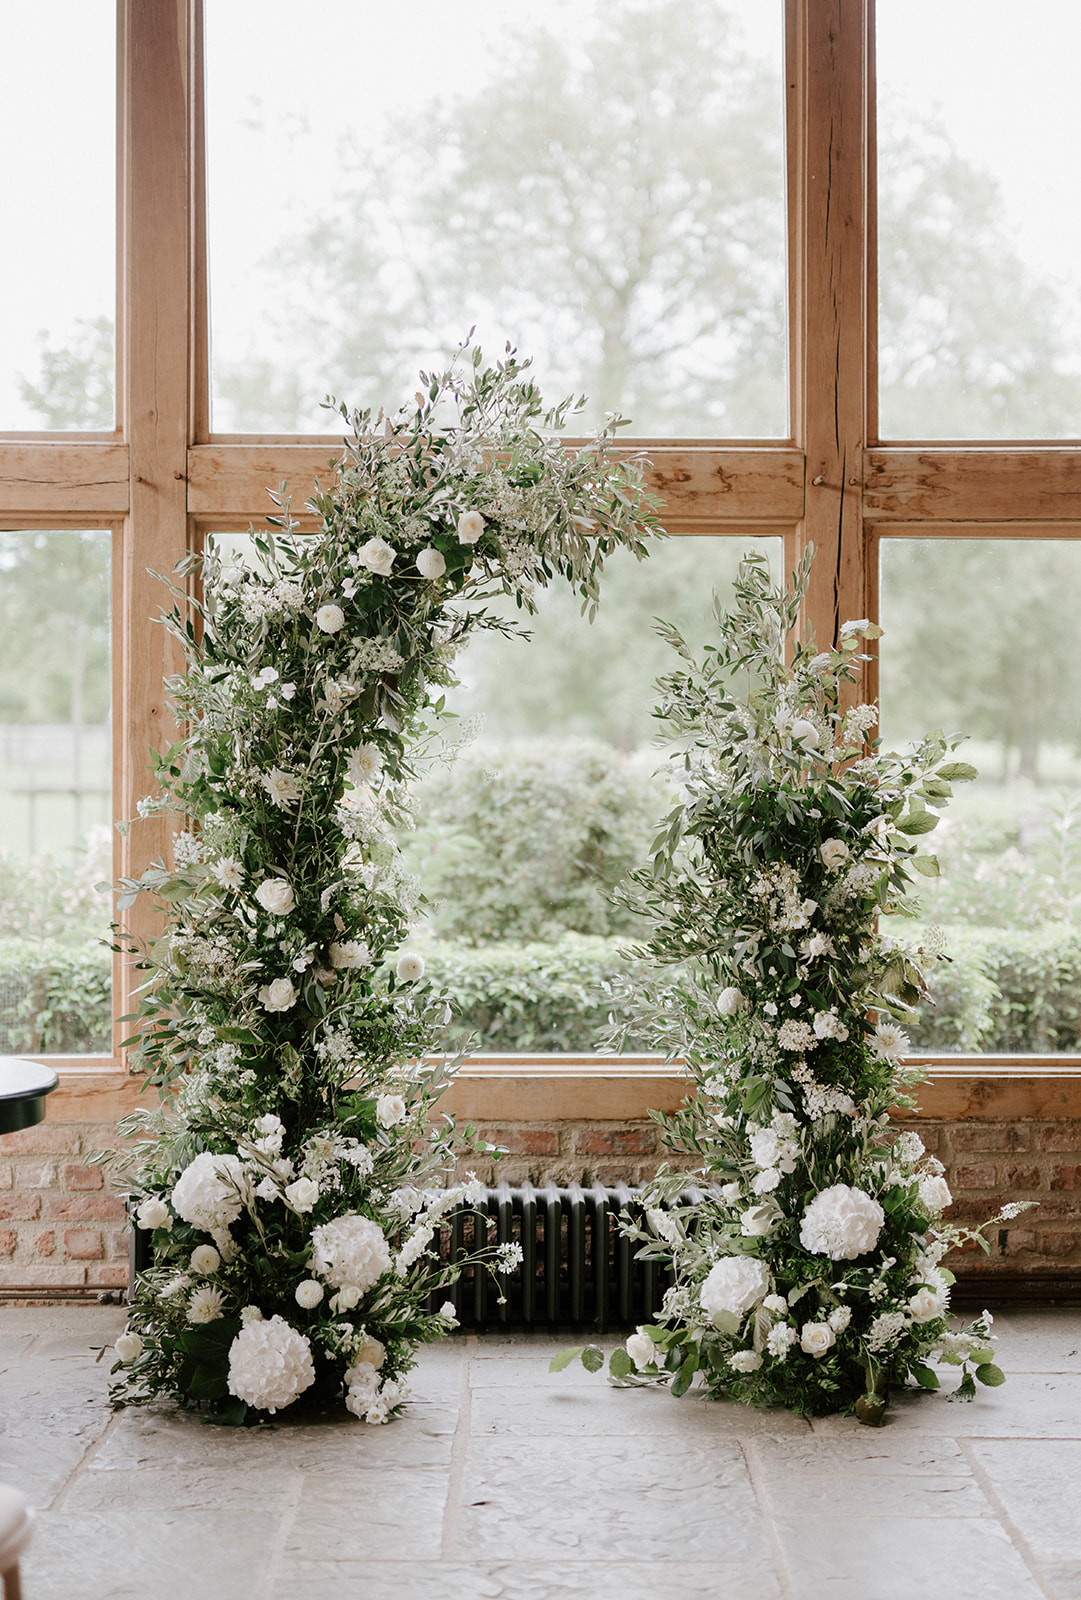 neutral floral wedding arch ceremony backdrop at barns and yard wedding venue